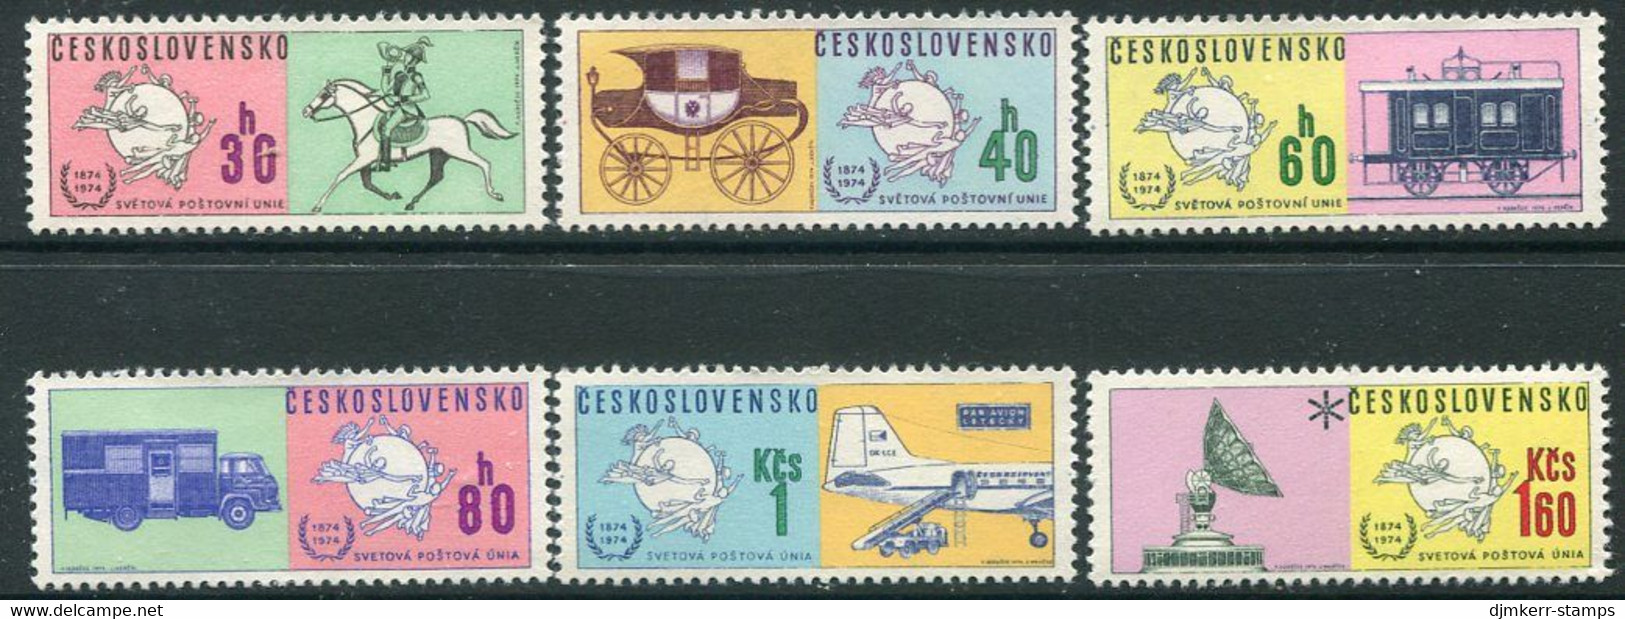 CZECHOSLOVAKIA 1974 Universal Postal Union MNH / **  Michel 2222-27 - Unused Stamps